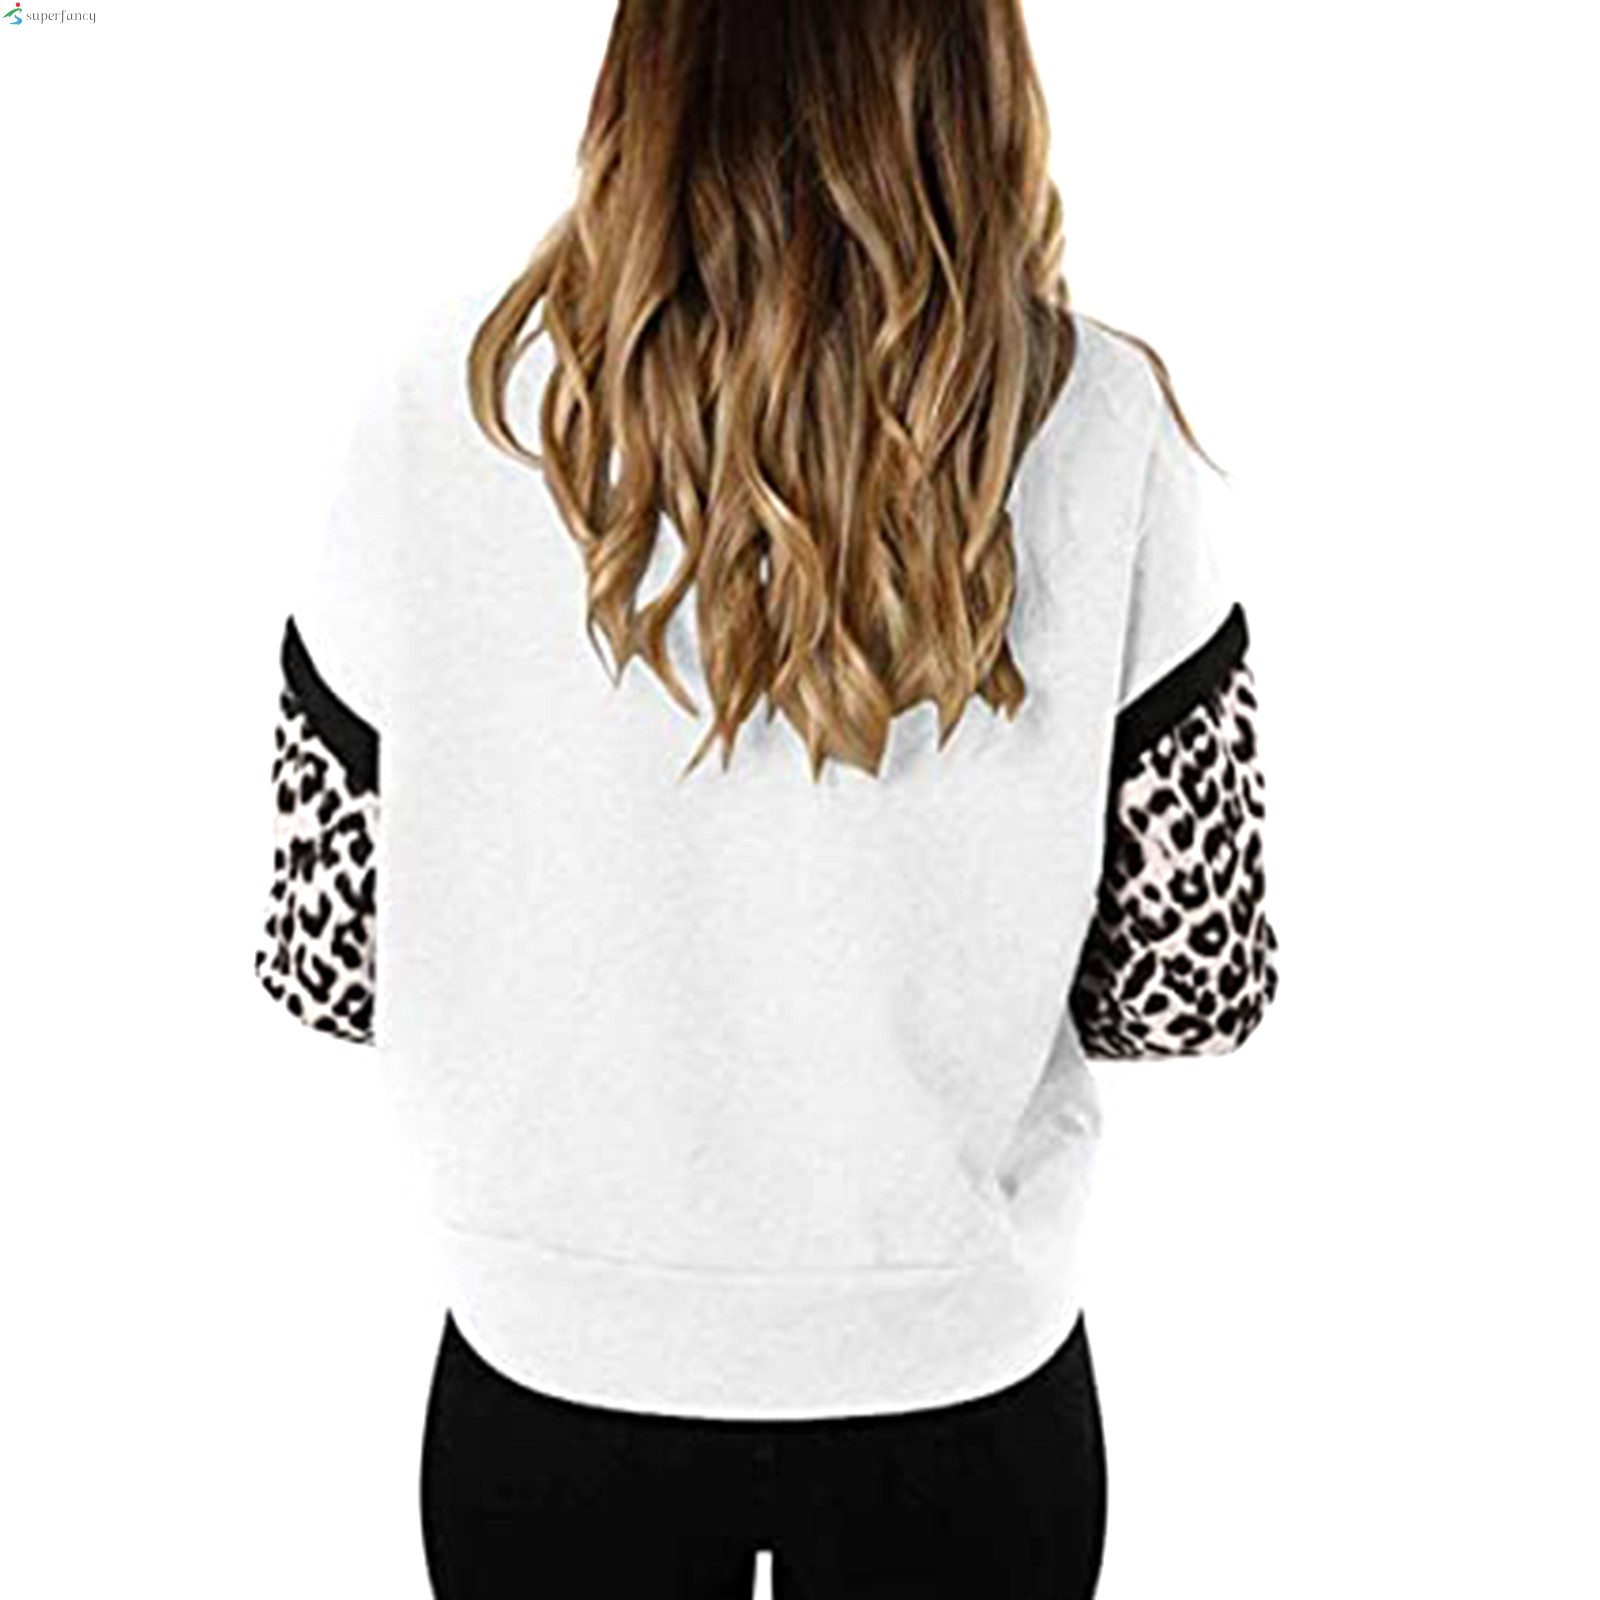 Sweatshirt for Women Long Sleeve Popular Leopard Patern Round Neck Loose Blouse